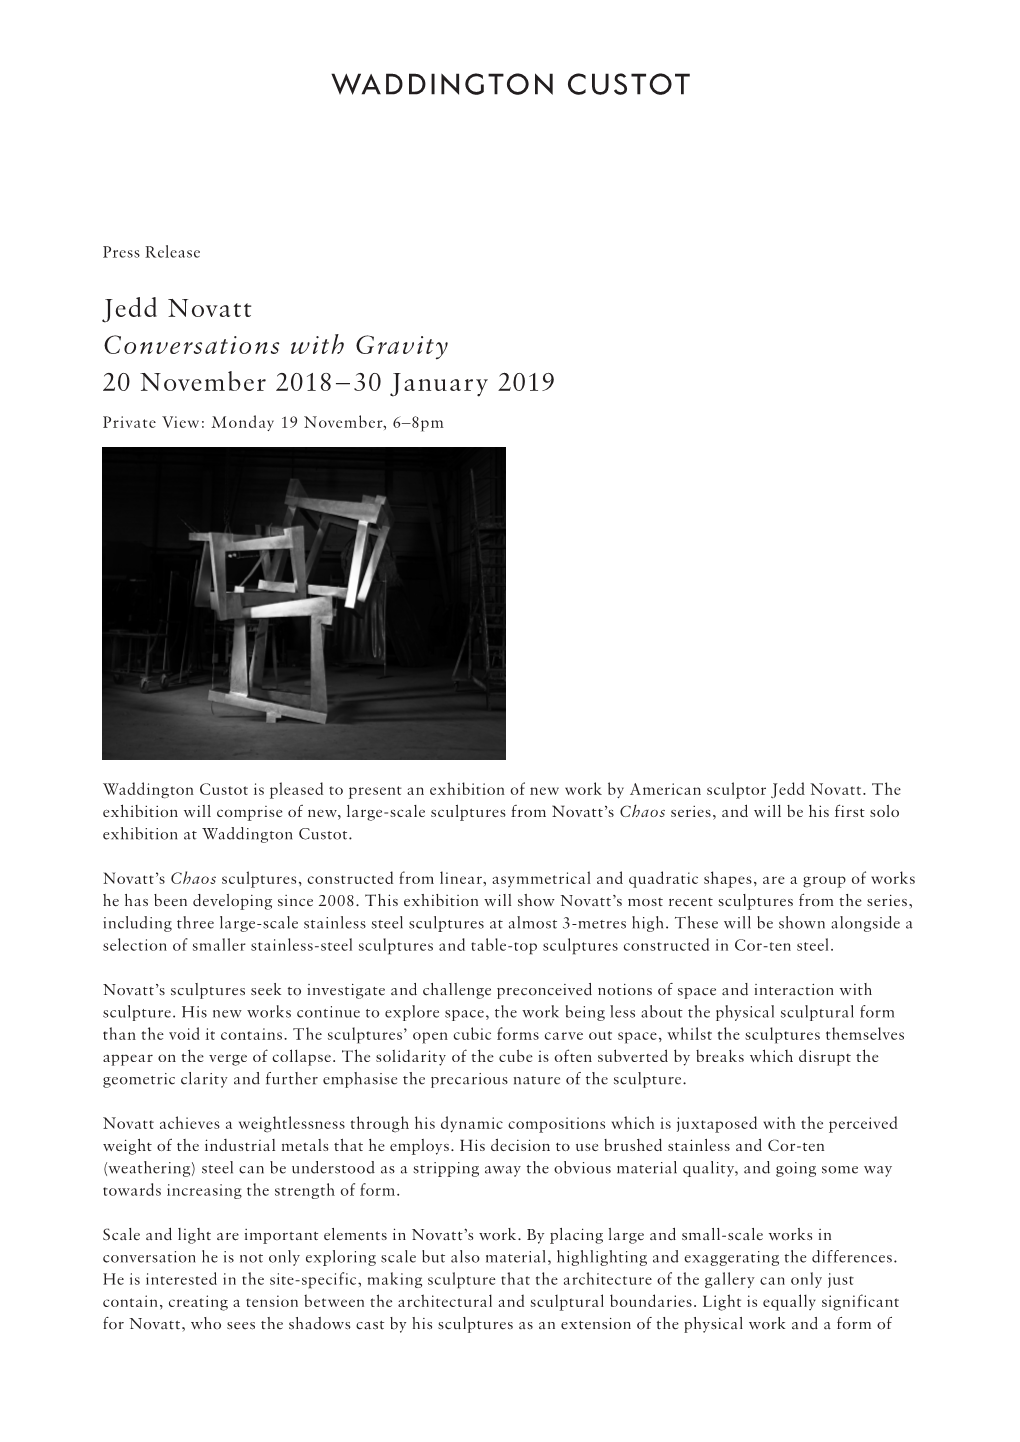 Jedd Novatt Conversations with Gravity 20 November 2018 – 30 January 2019